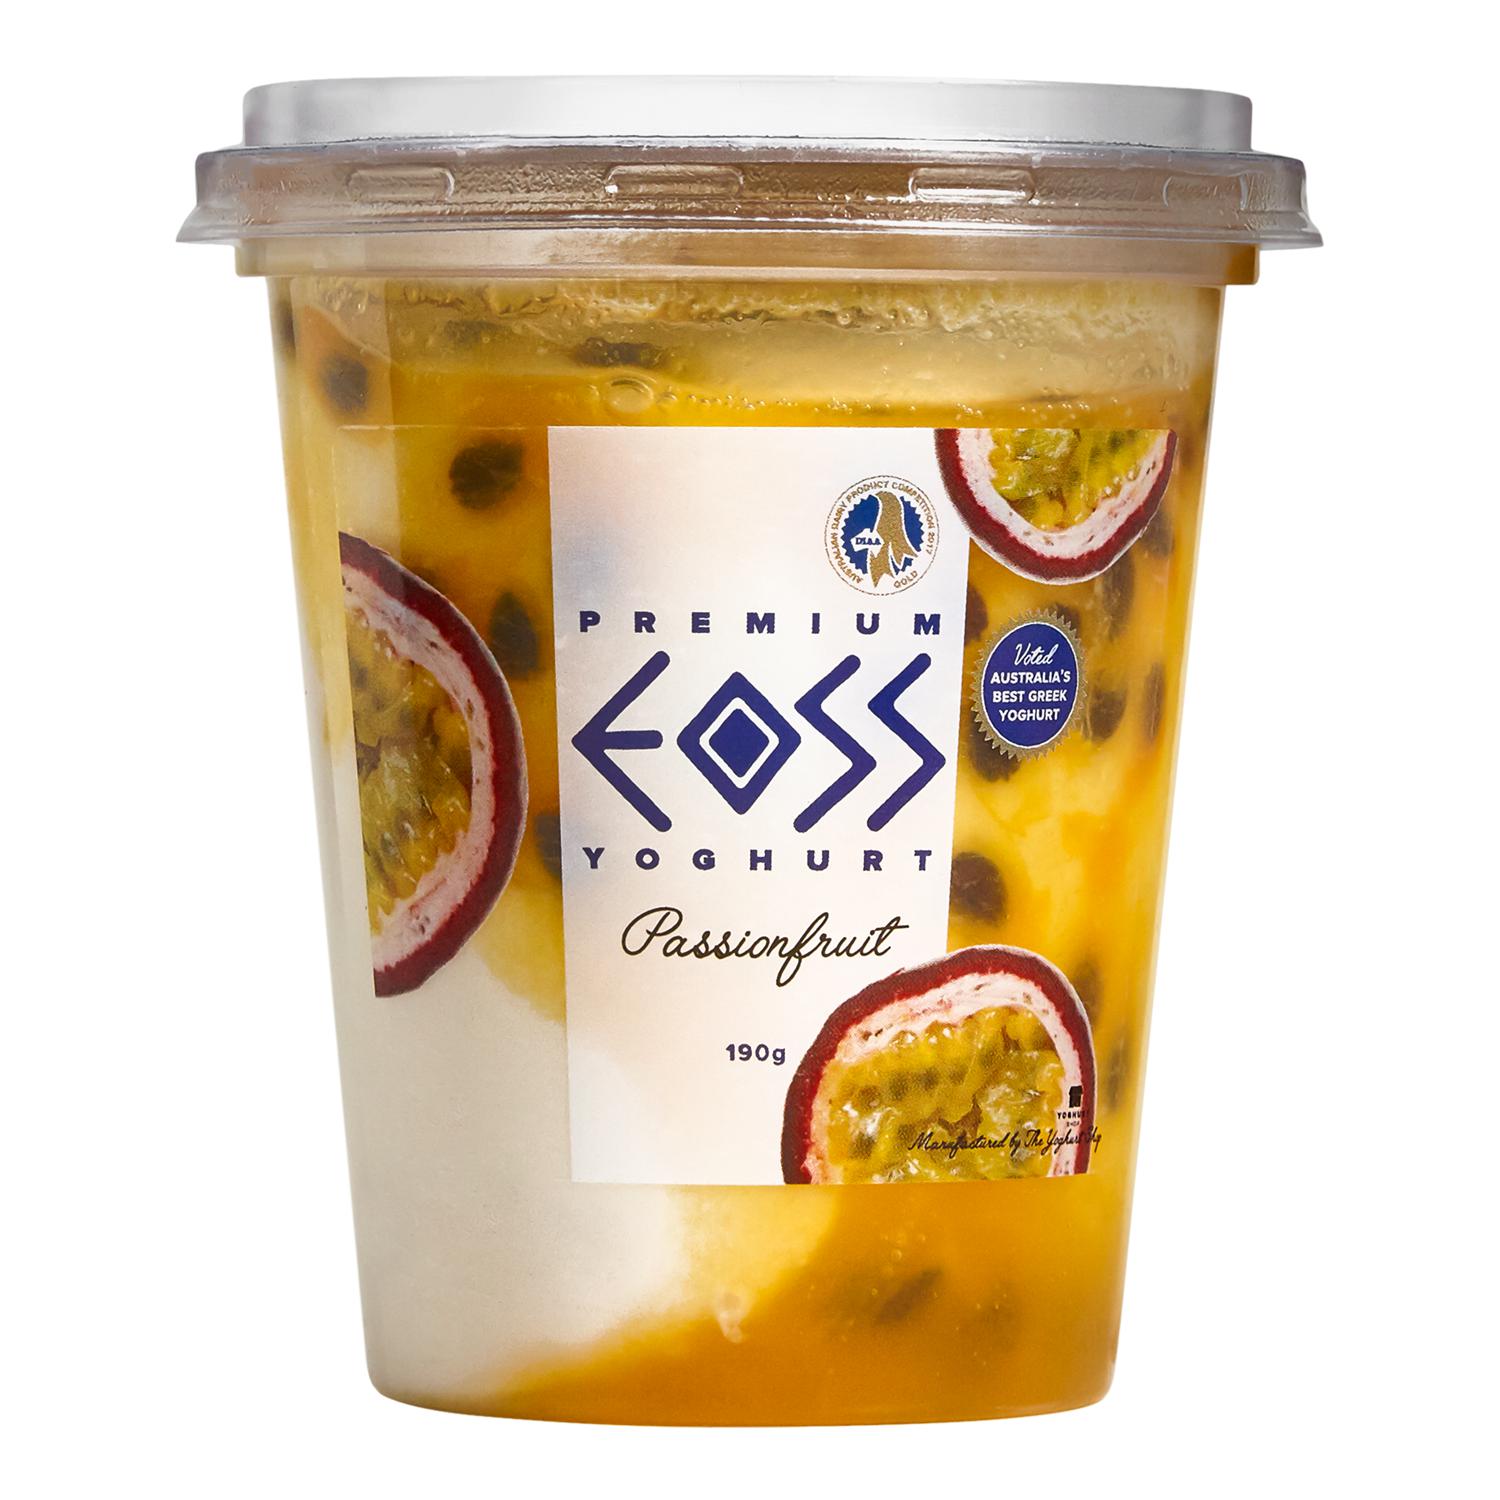 EOSS Yoghurt Passionfruit Cup 190g